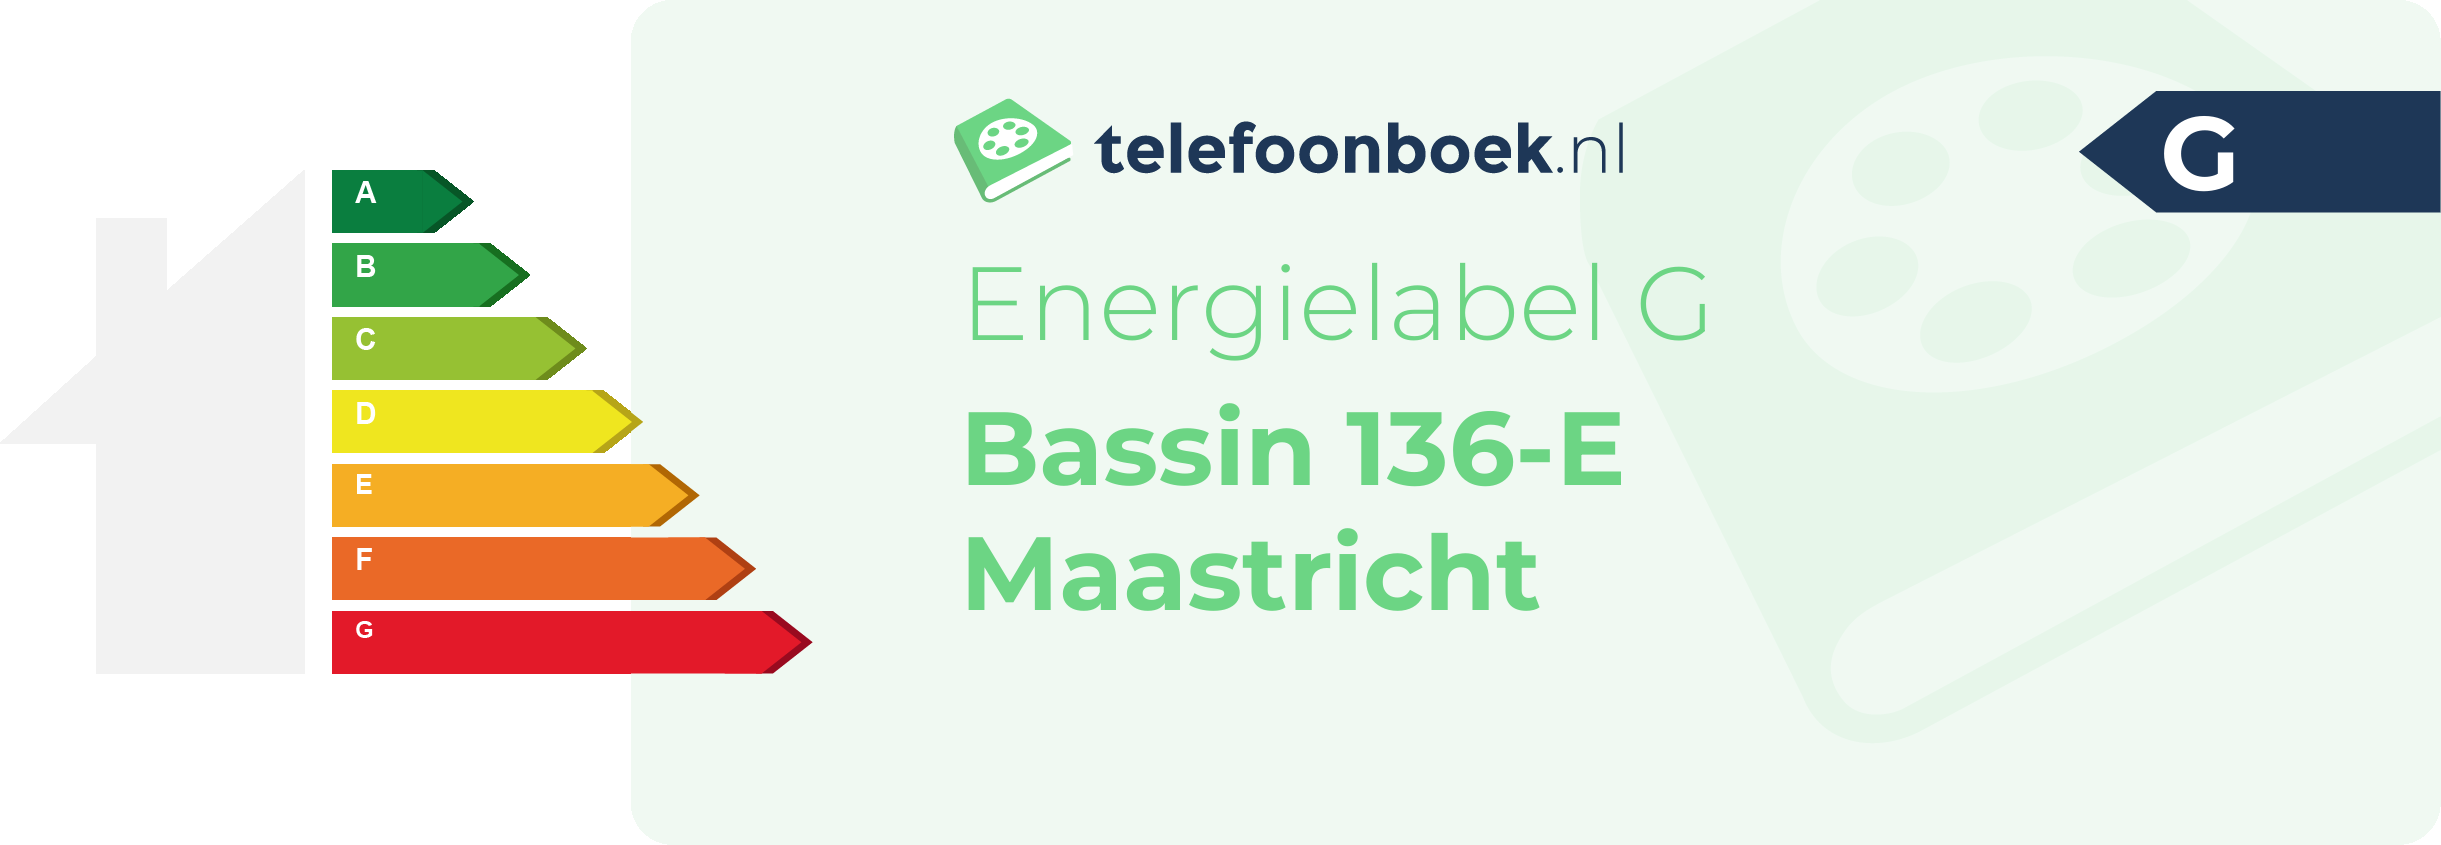 Energielabel Bassin 136-E Maastricht